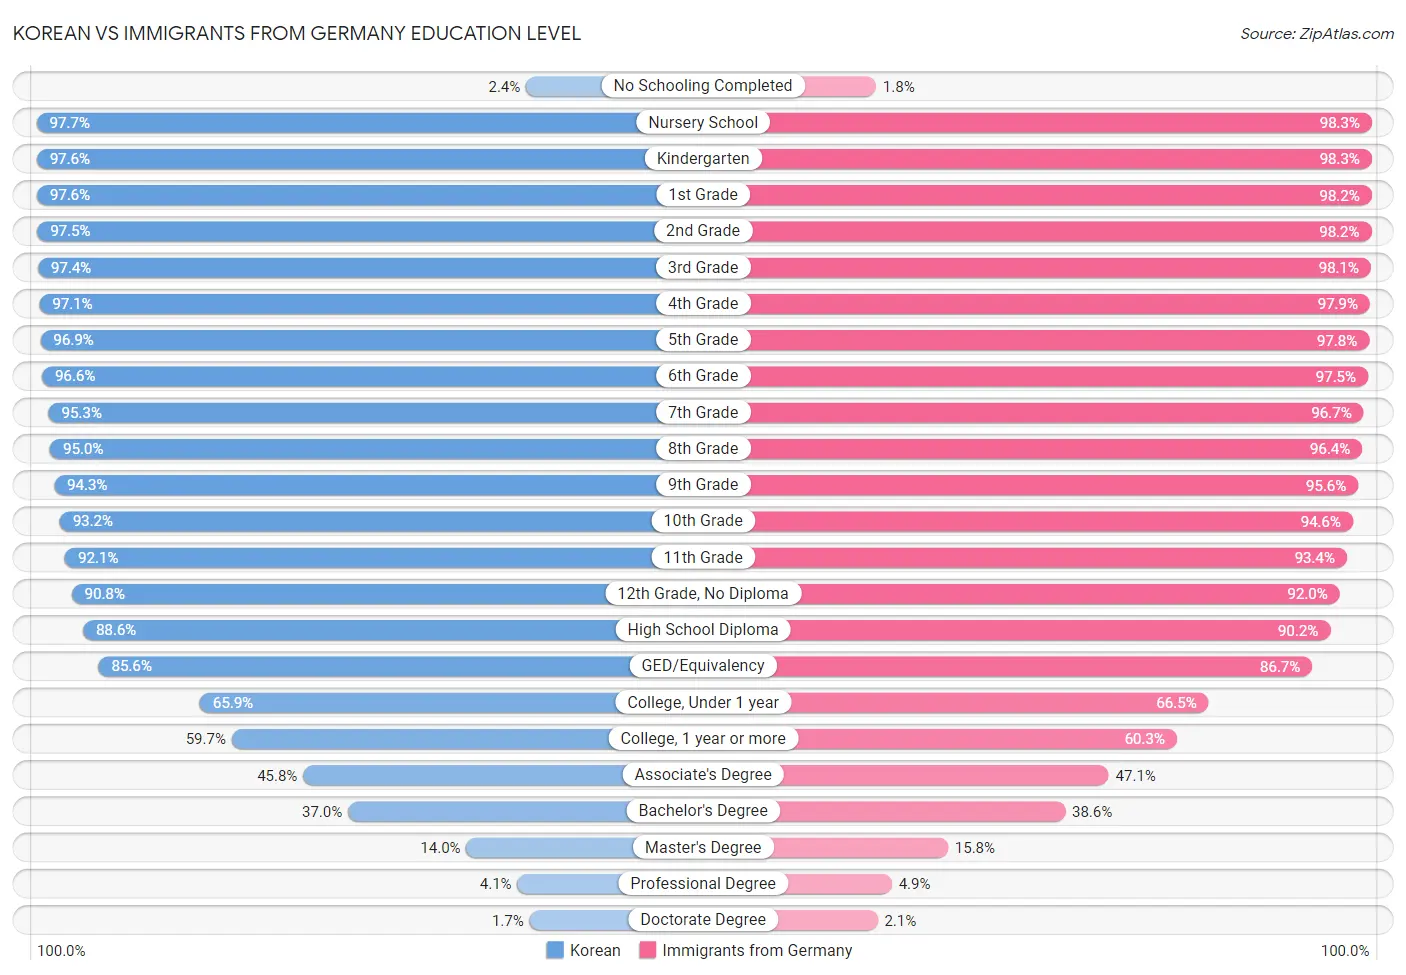 Korean vs Immigrants from Germany Education Level